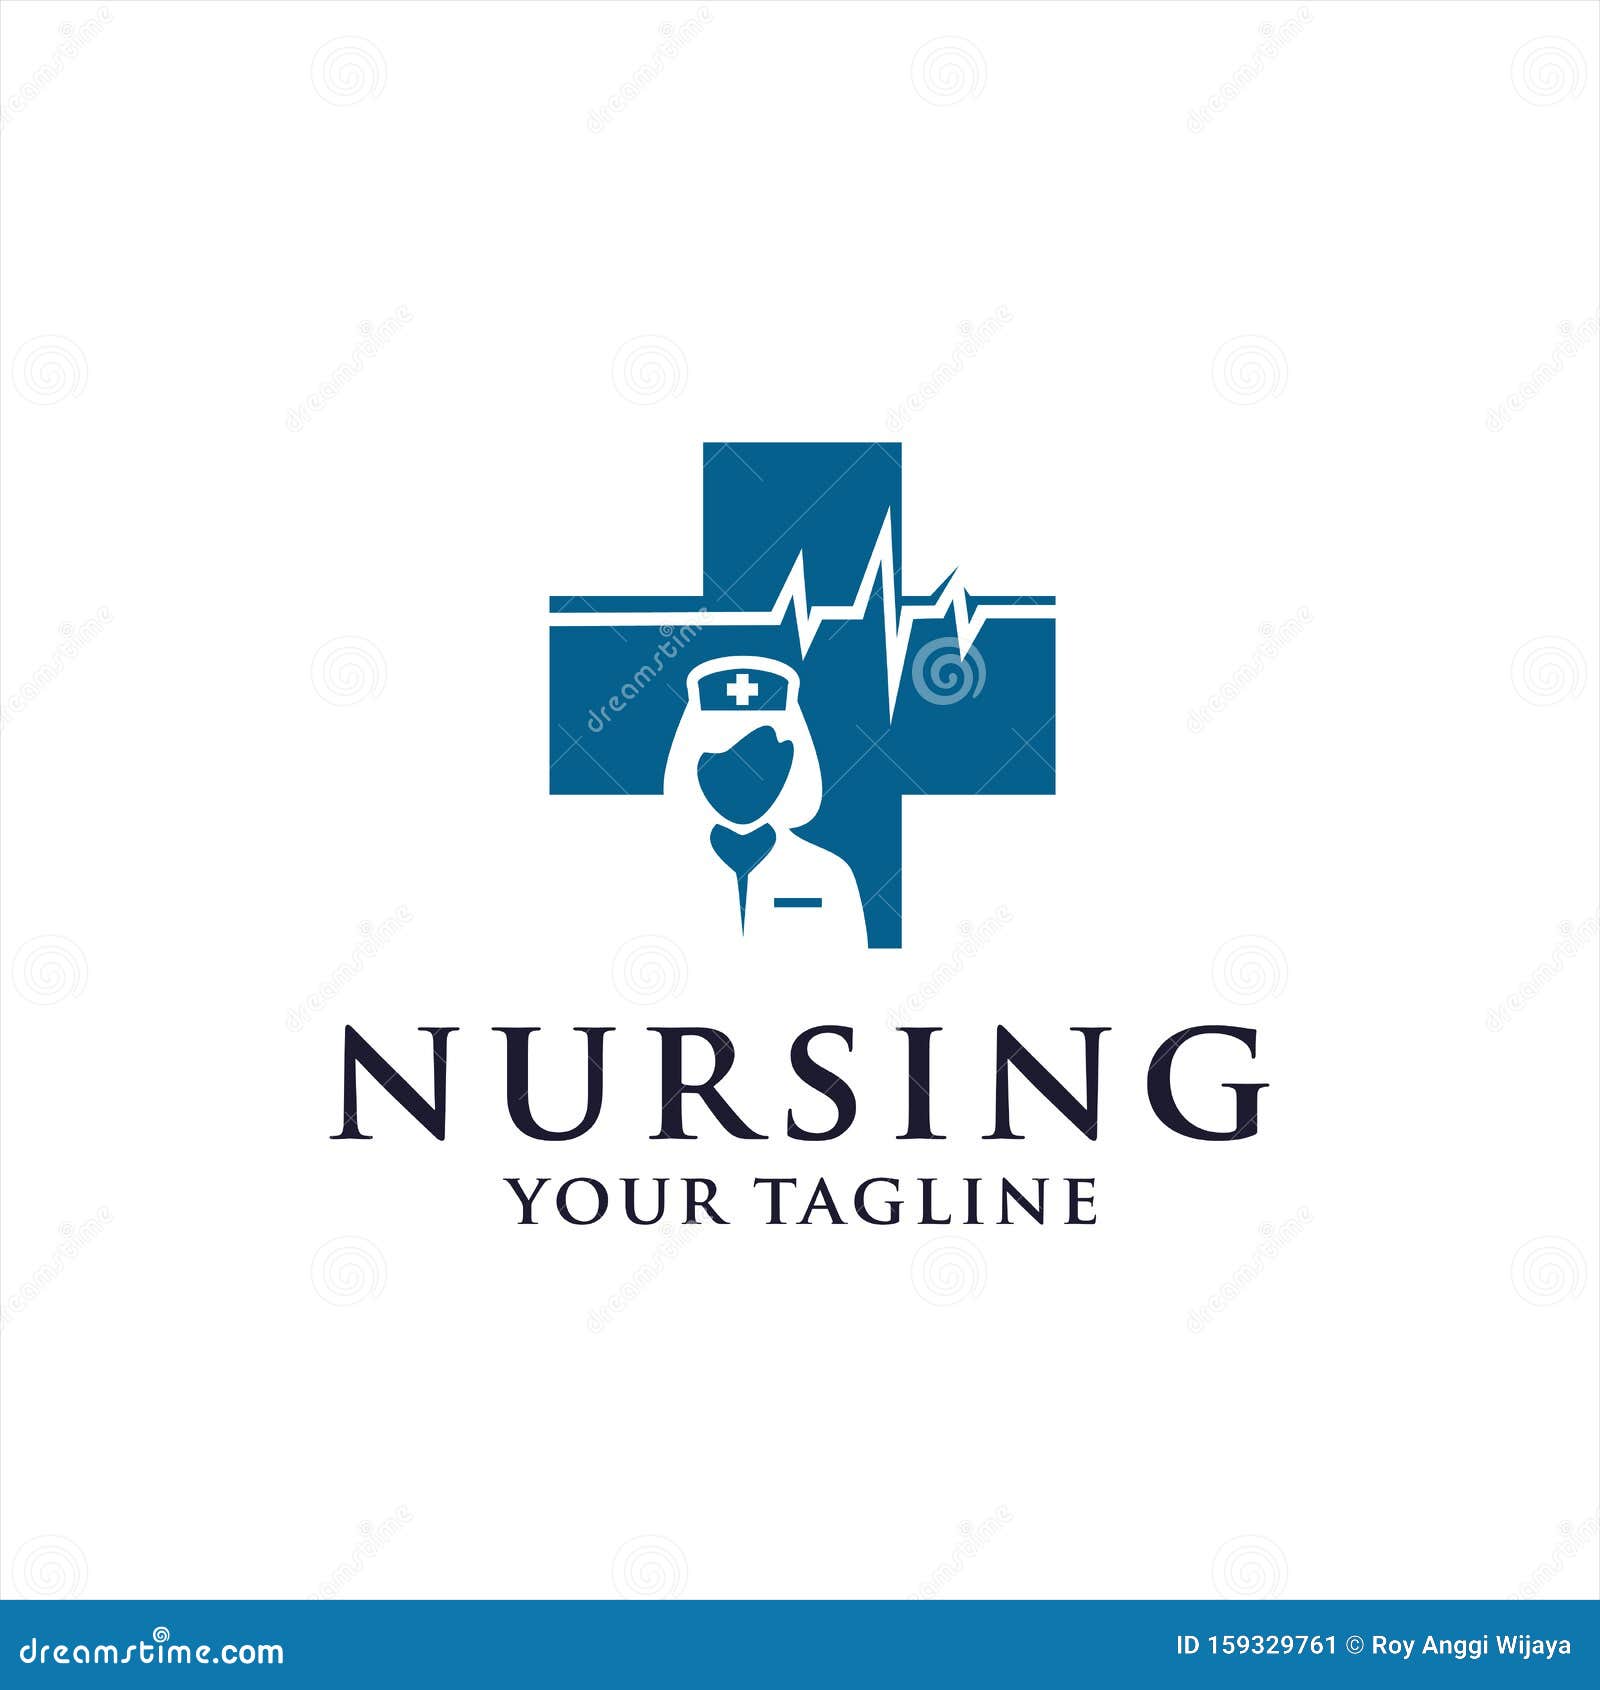 nursing logo ideas 4